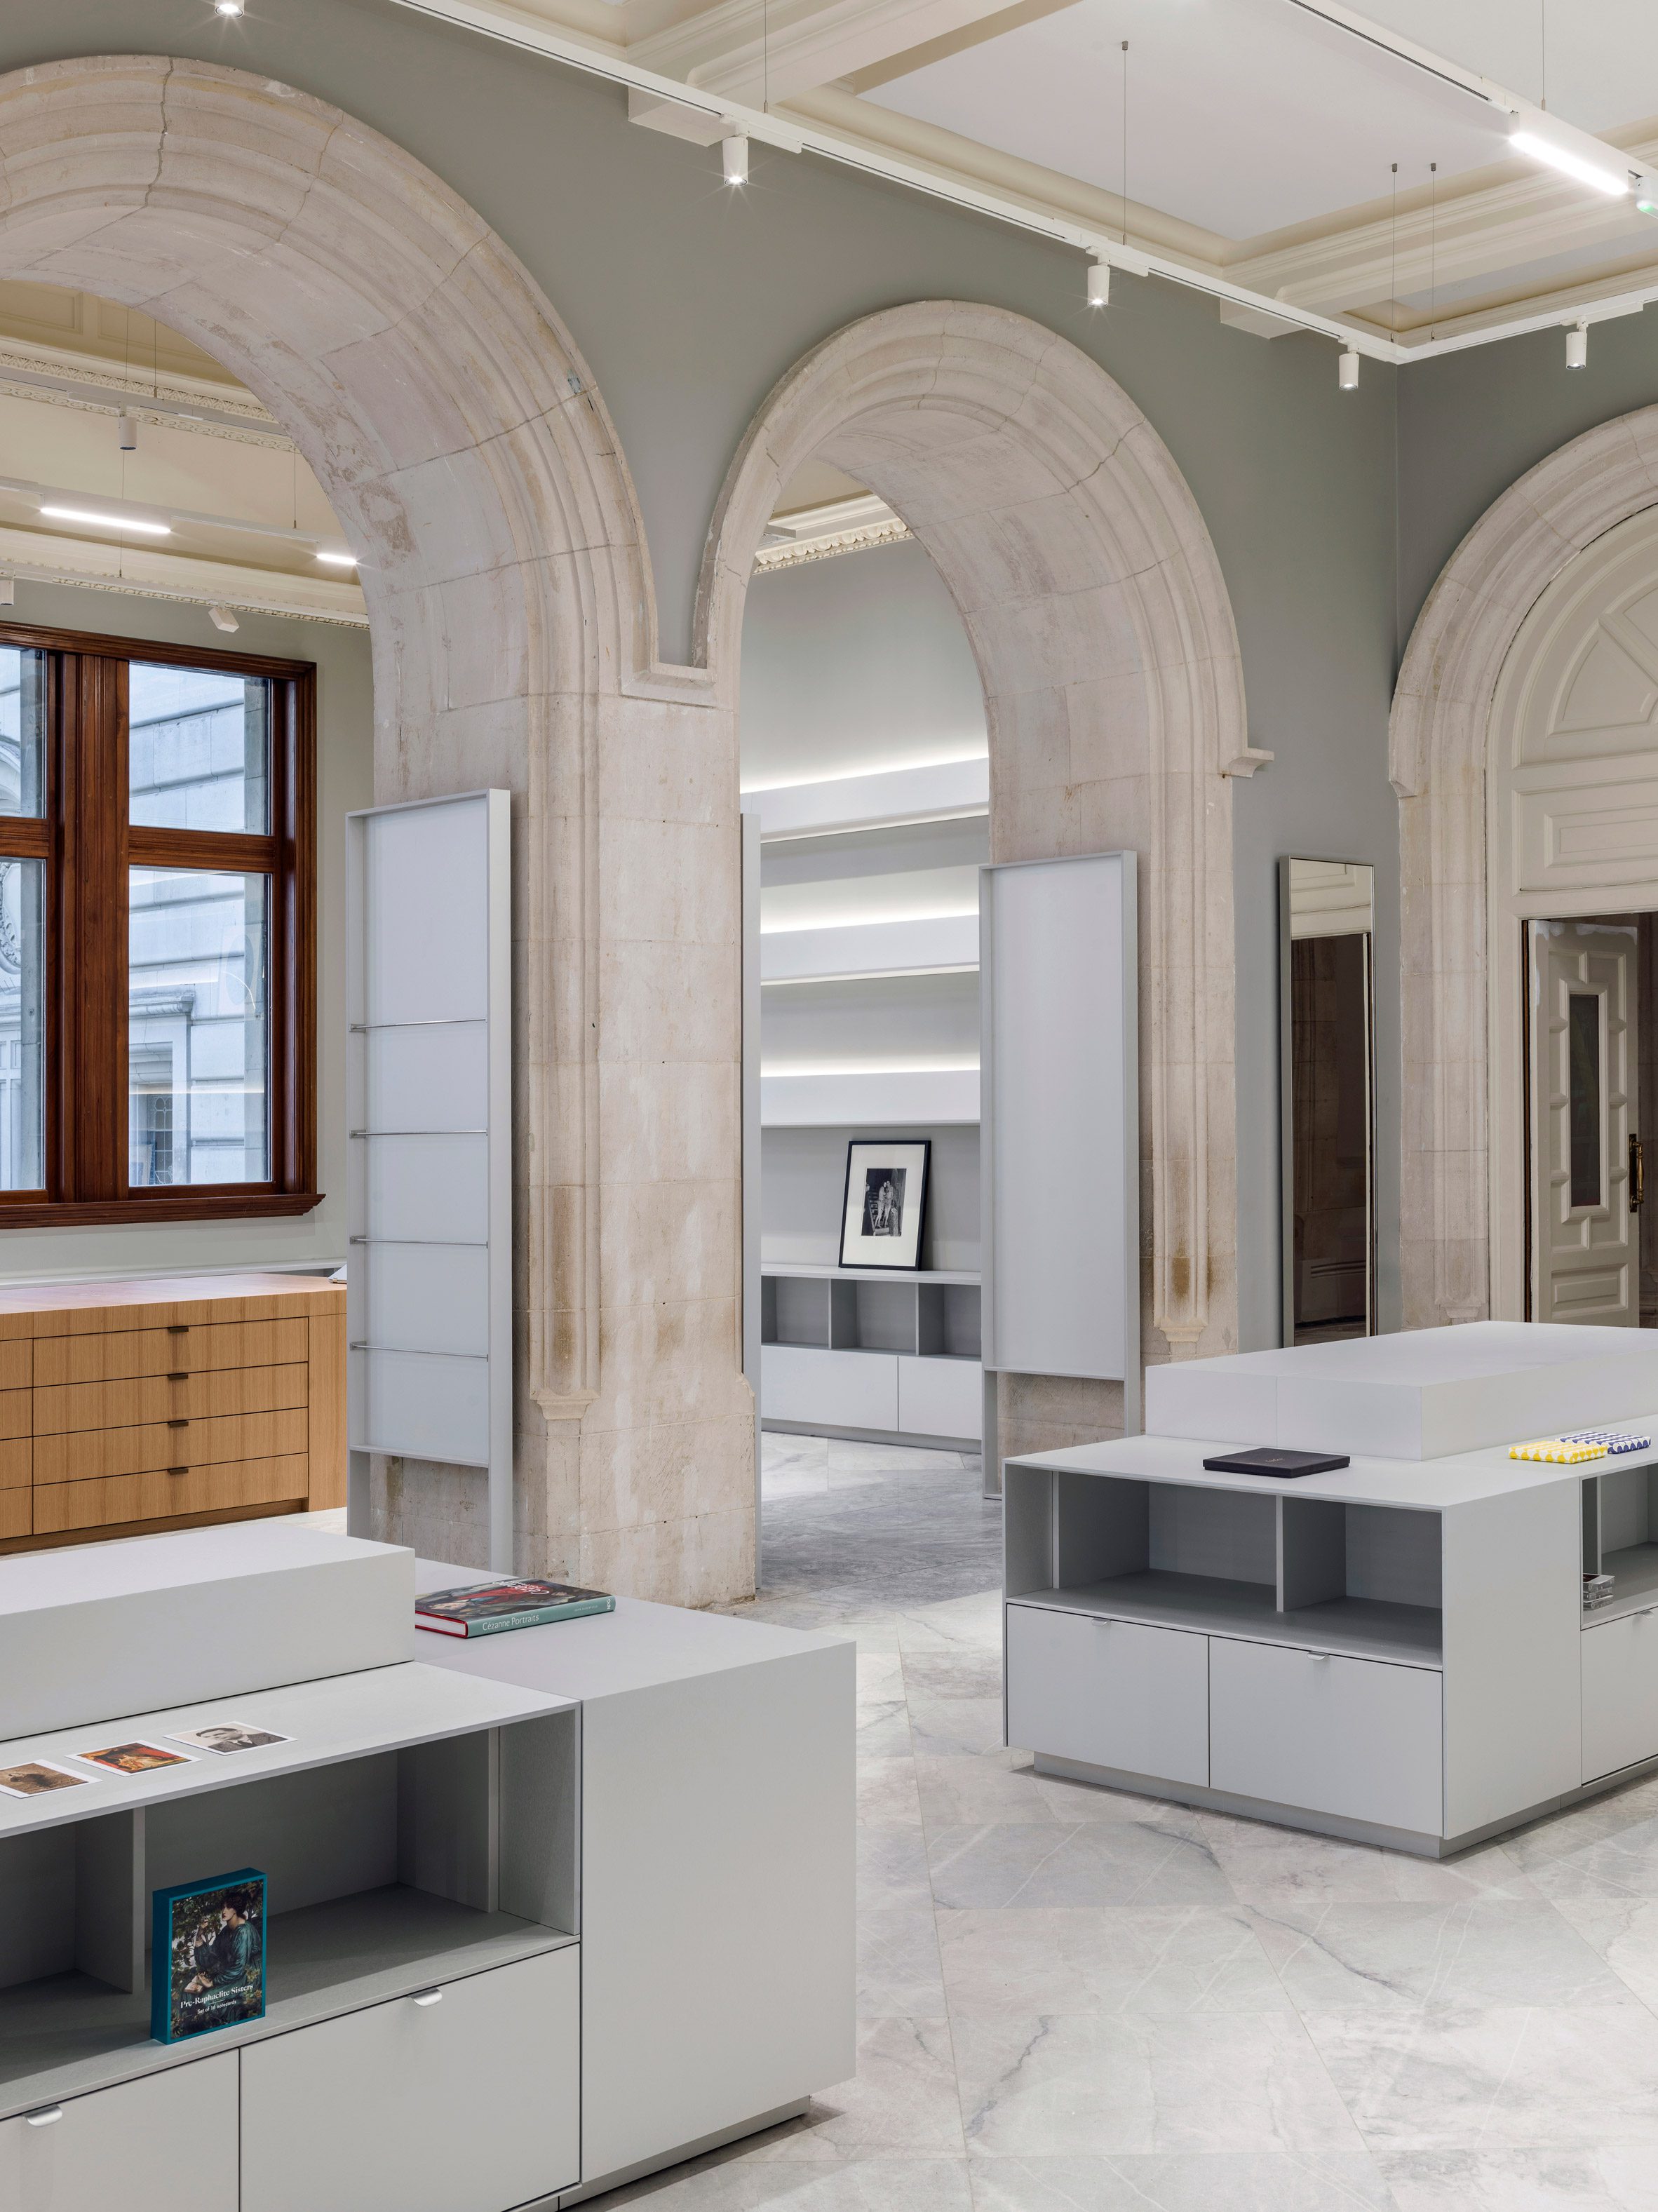 Alex Cochrane Architects设计的商店“拥抱国家肖像画廊的优雅比例”|ART-Arrakis | 建筑室内设计的创新与灵感